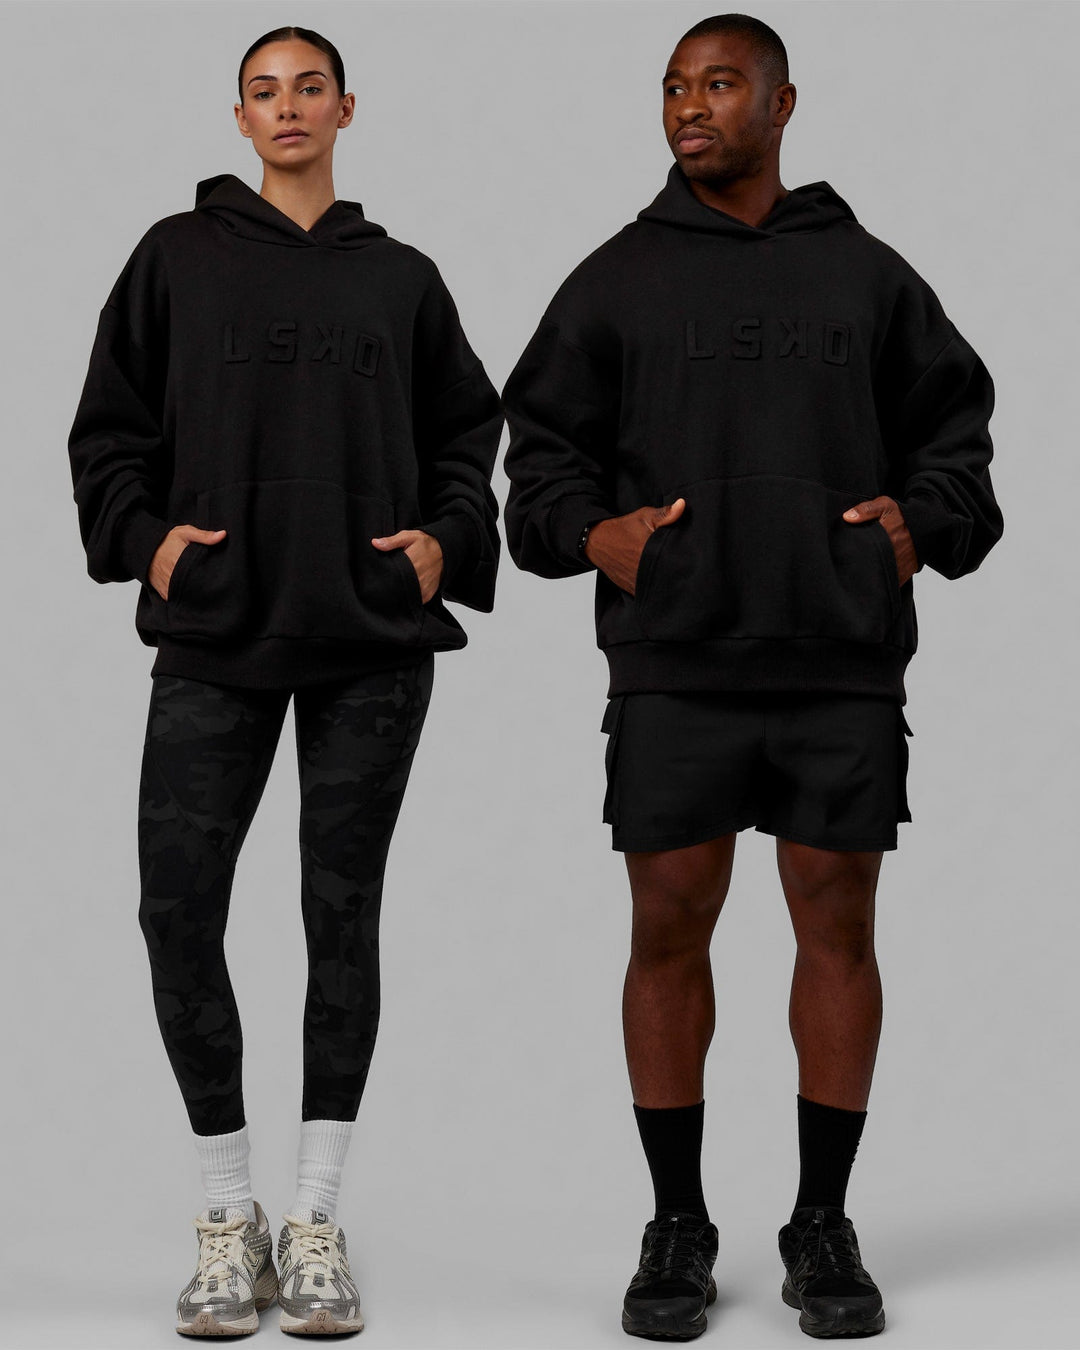 Duo wearing Unisex Stamped Hoodie Oversize - Black